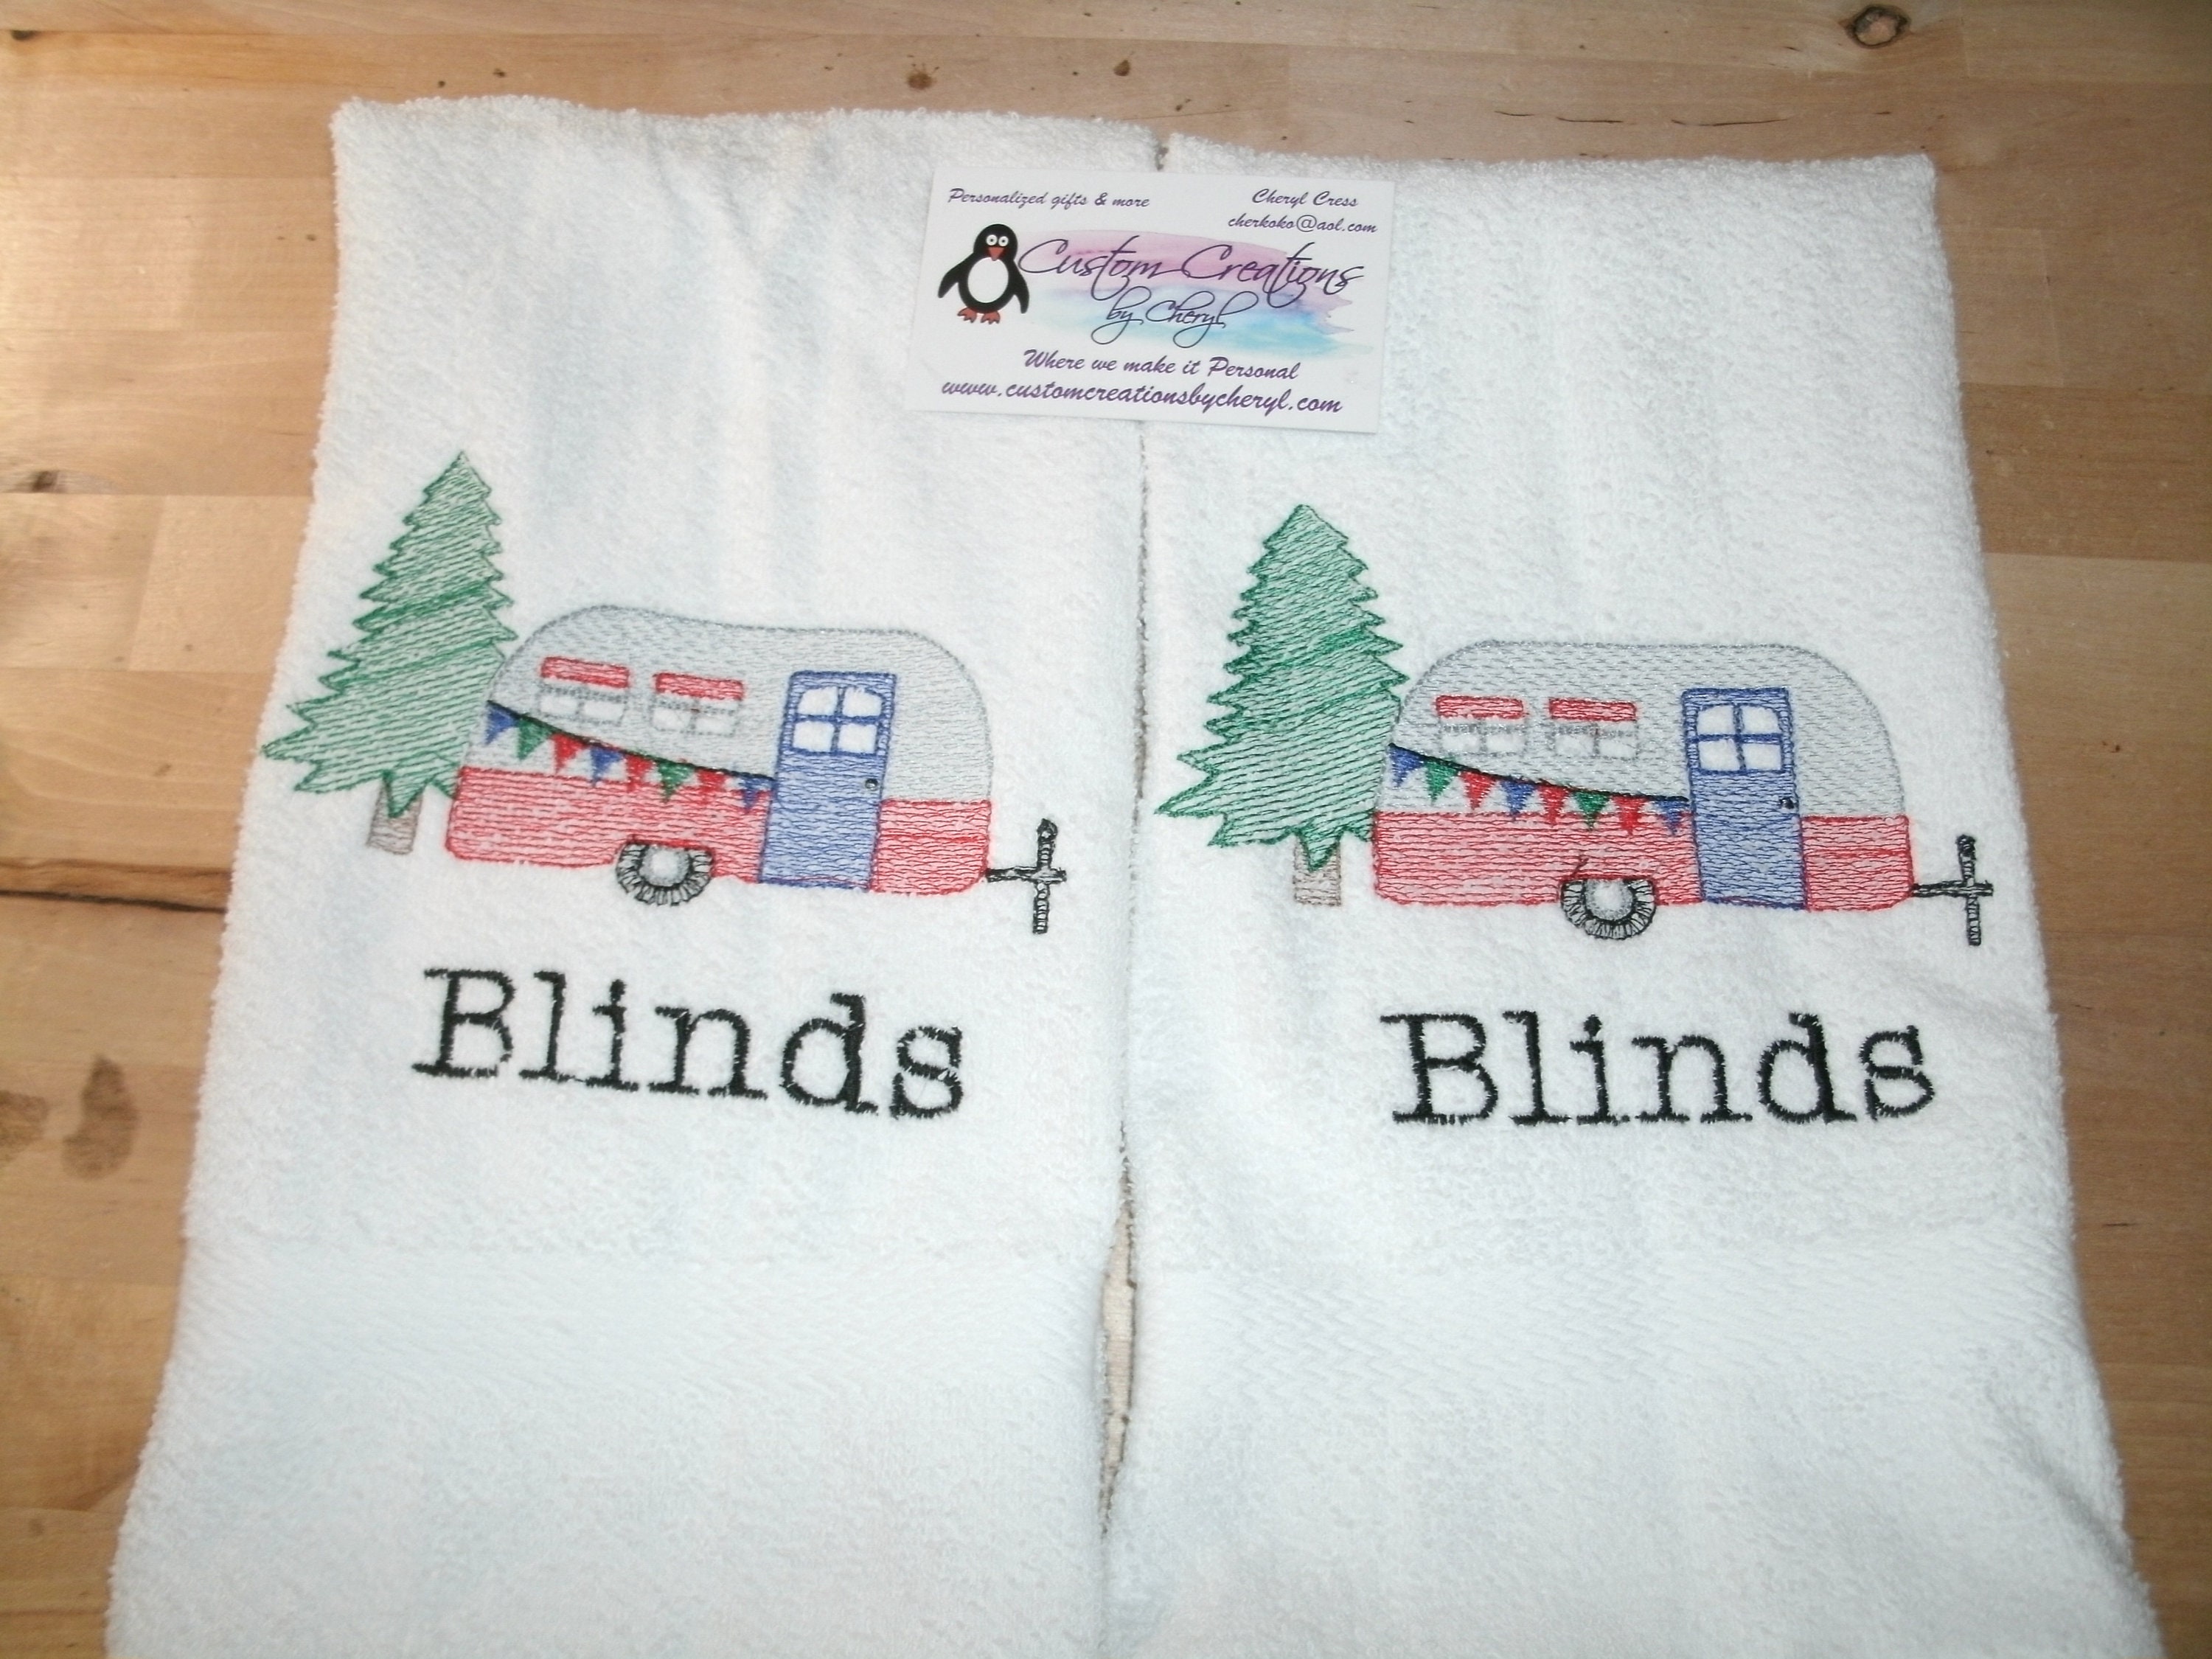 2 Camping Dish Towels Bear Hand Towel RV Camper Kitchen Dishcloth